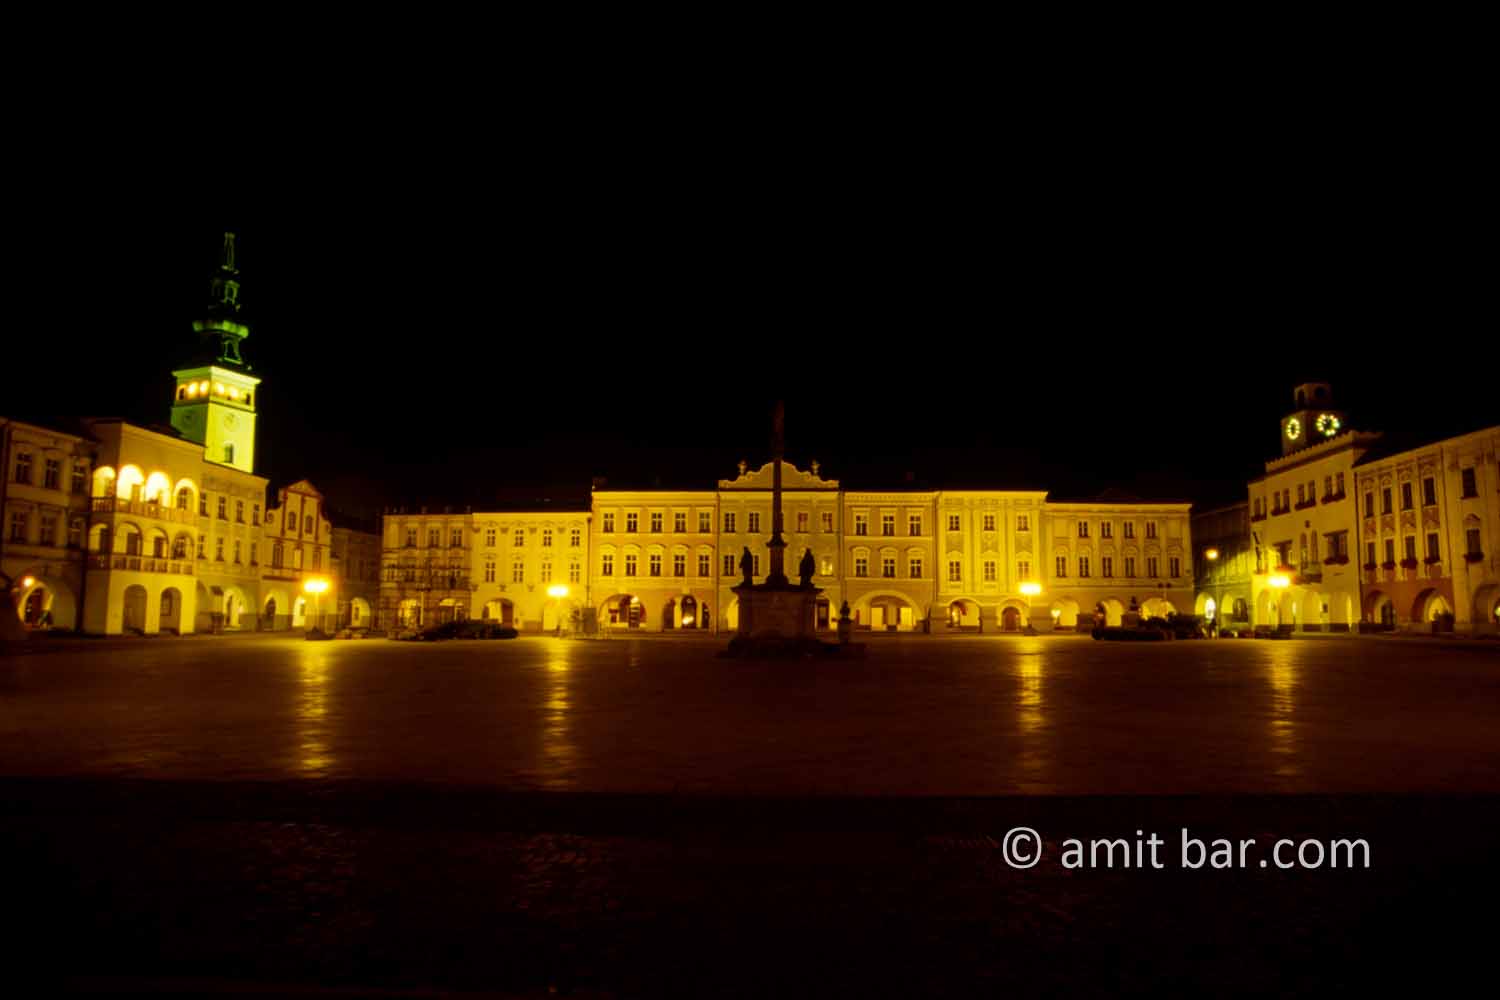 Nový Jičín by night: Nový Jičín (Neutitschein) town-square by night